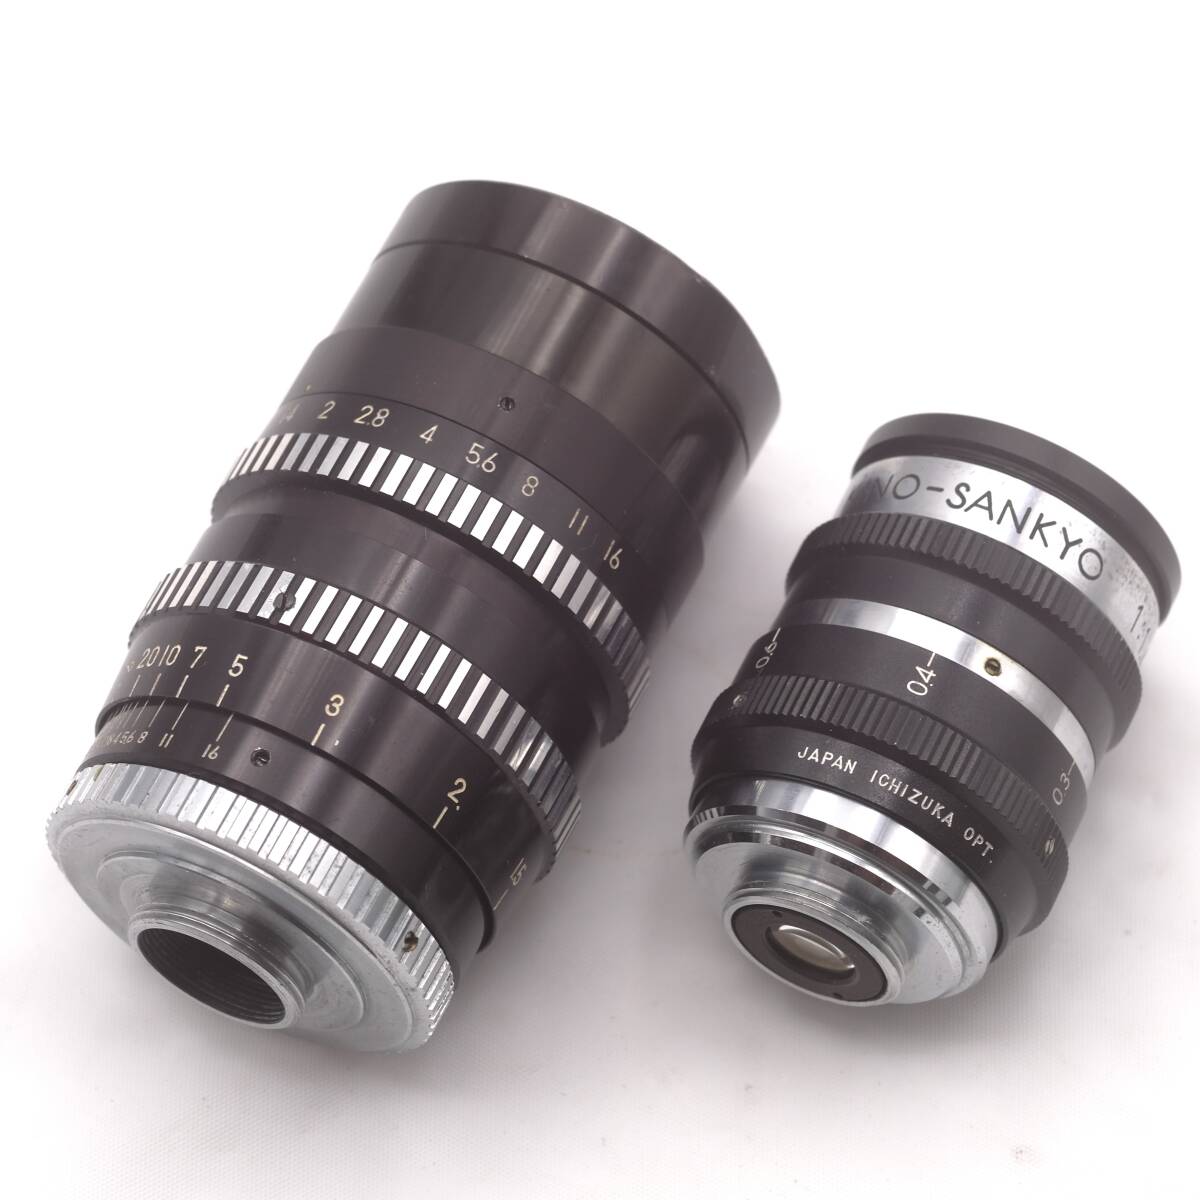 ICHIZUKA KINO-SANKYO 13mm F1.4, CINE ARCO 38mm F1.4 D mount sine lens 